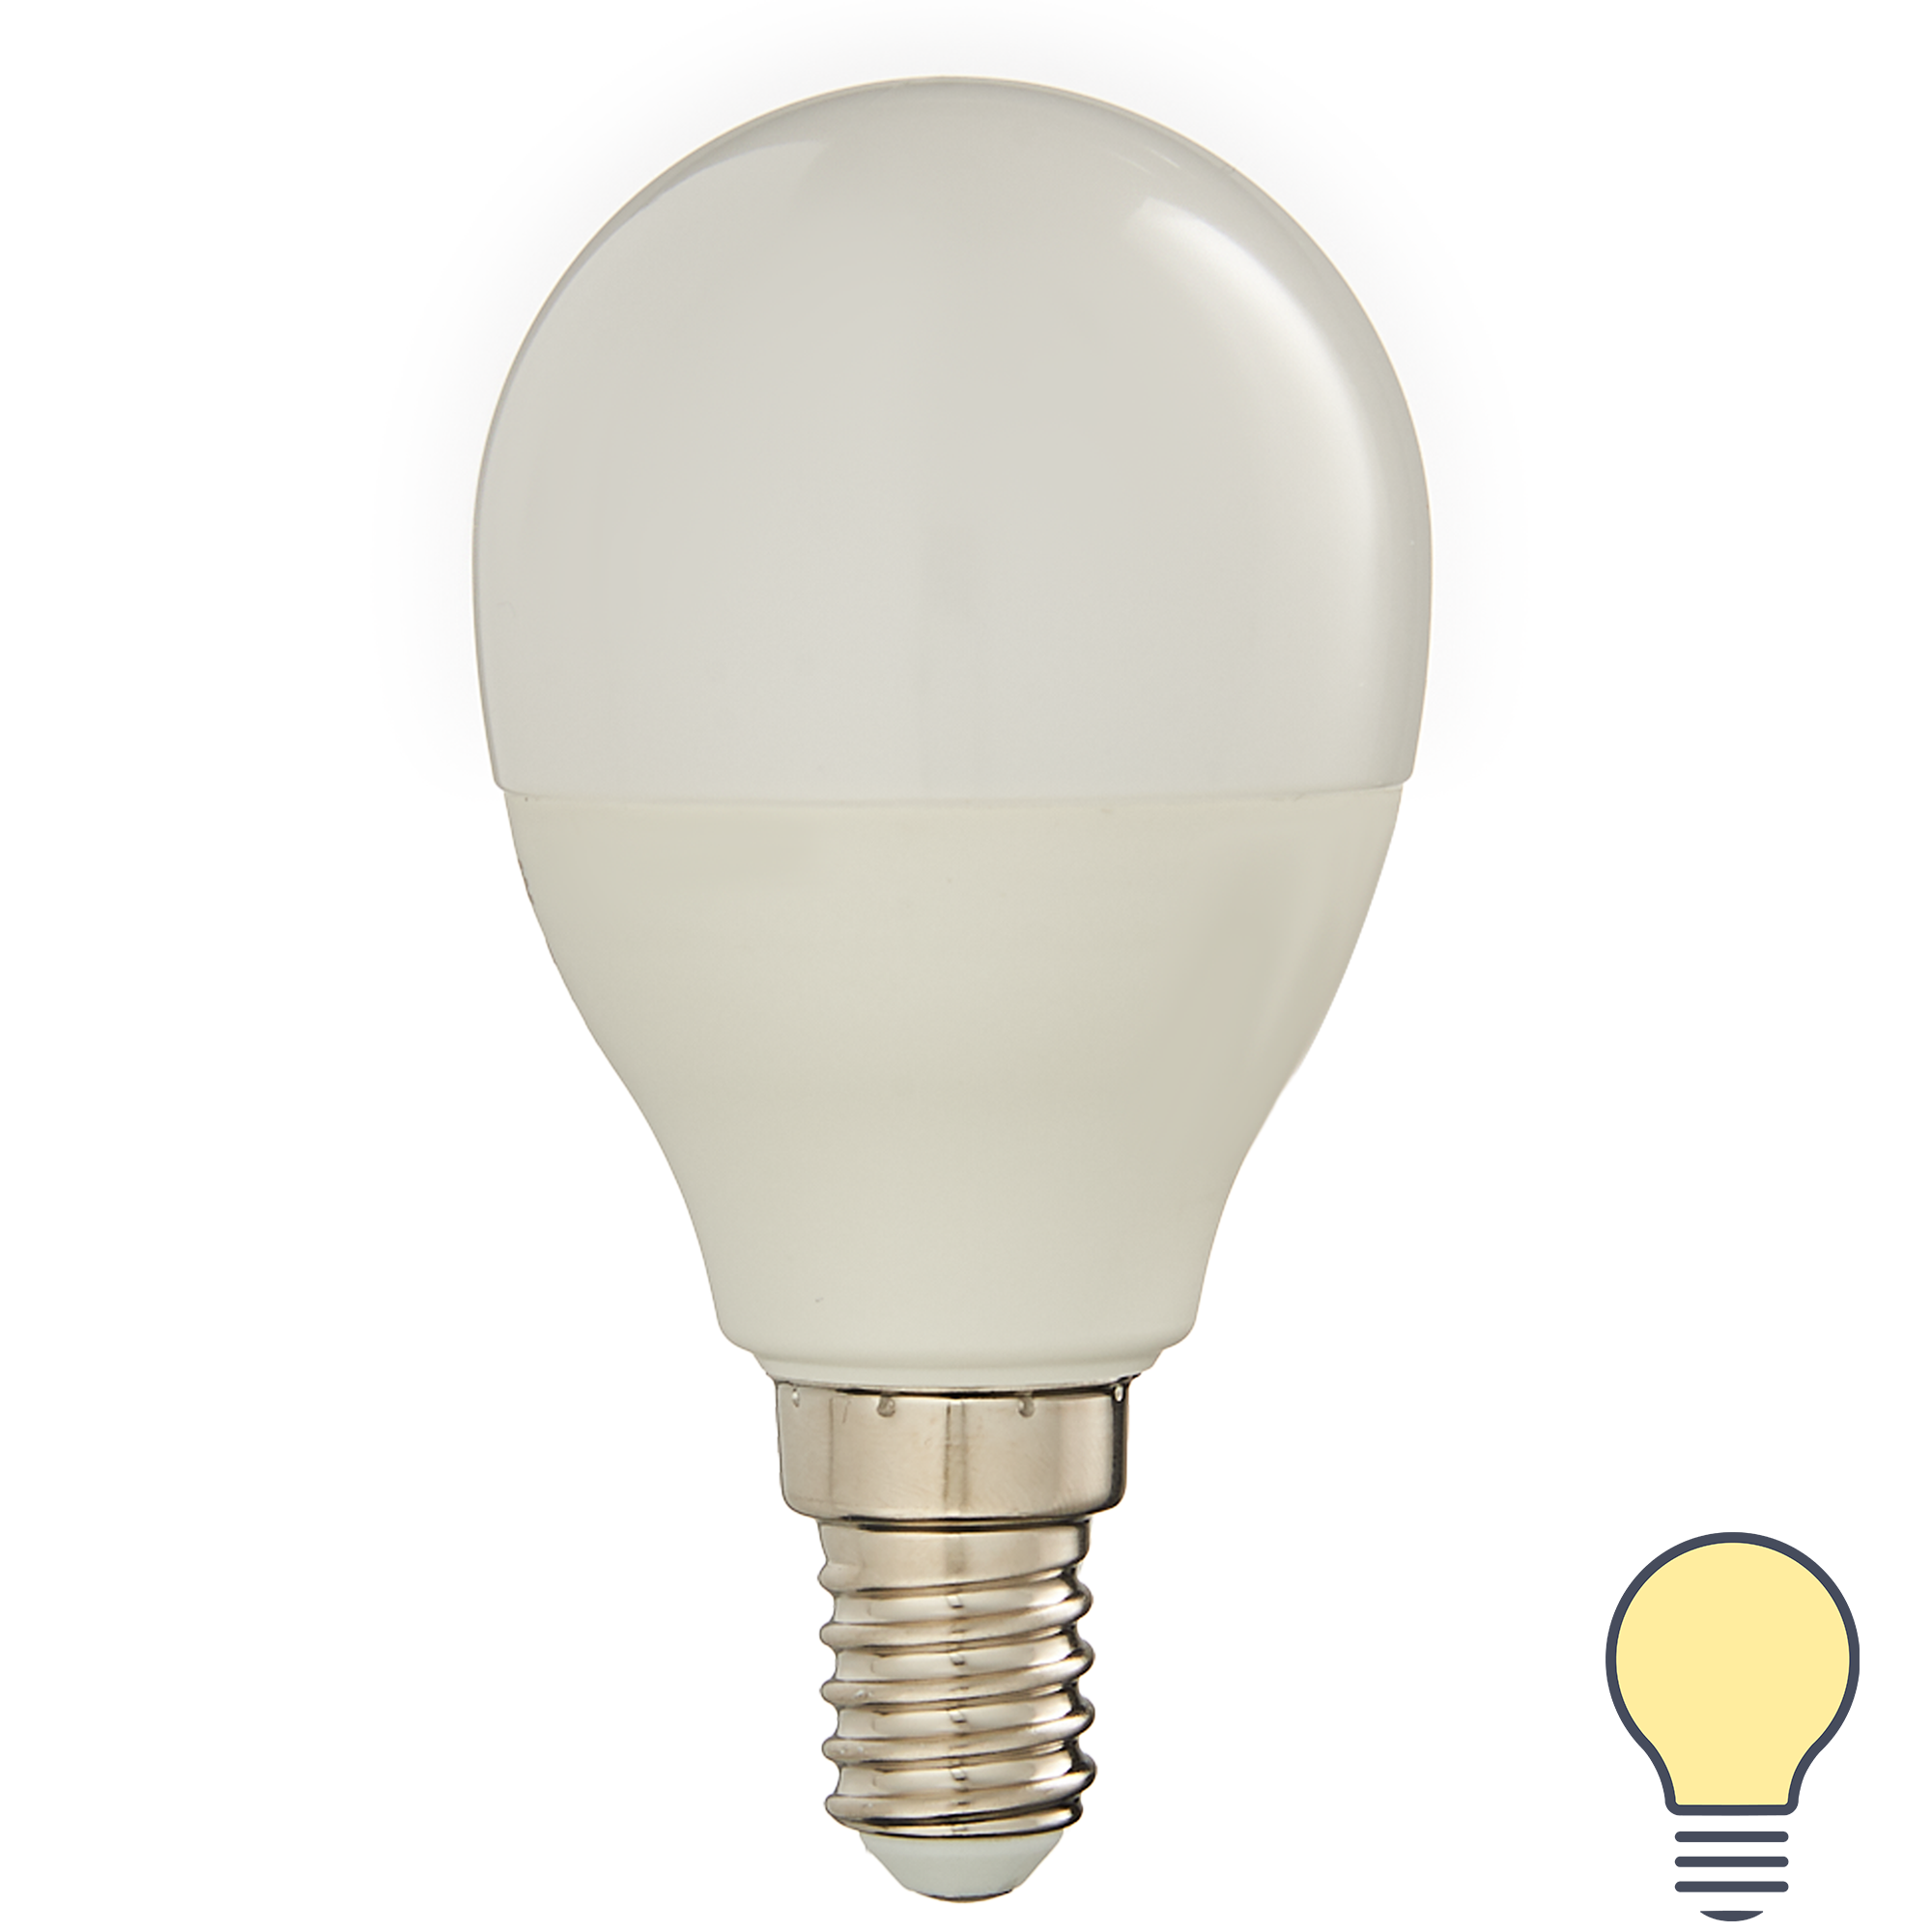 89143910 Лампа умная светодиодная Wi-Fi Osram Smart Plus E14 220-240 В 5 Вт шар малый матовая 470 лм, теплый белый свет STLM-0079048 LEDVANCE